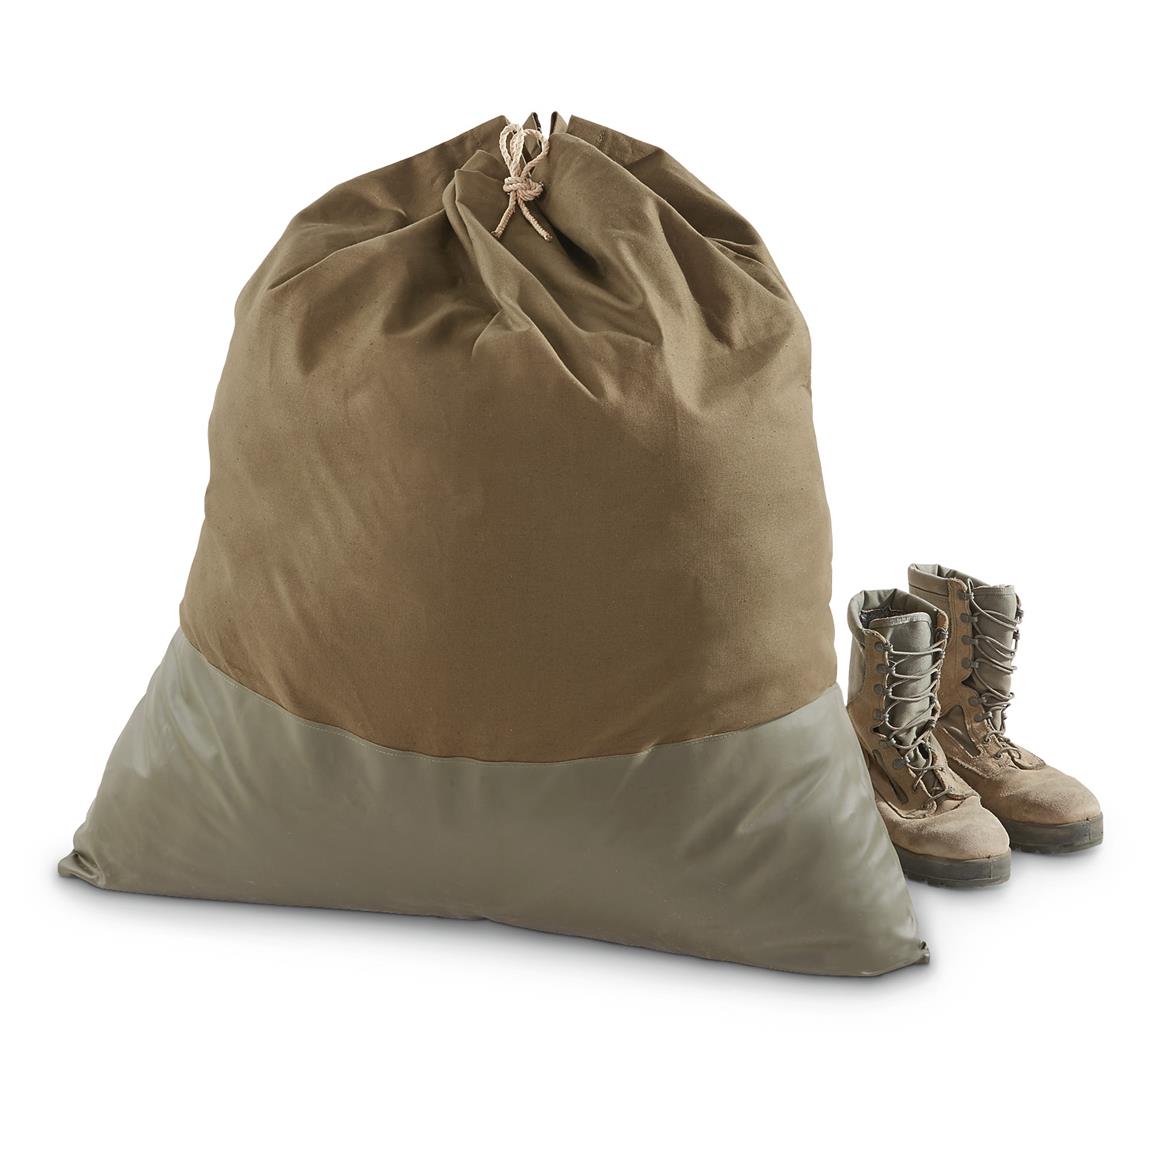 Swedish Military Surplus XL Canvas Duffel Bag, New - 642703, Military & Camo Duffle Bags at ...